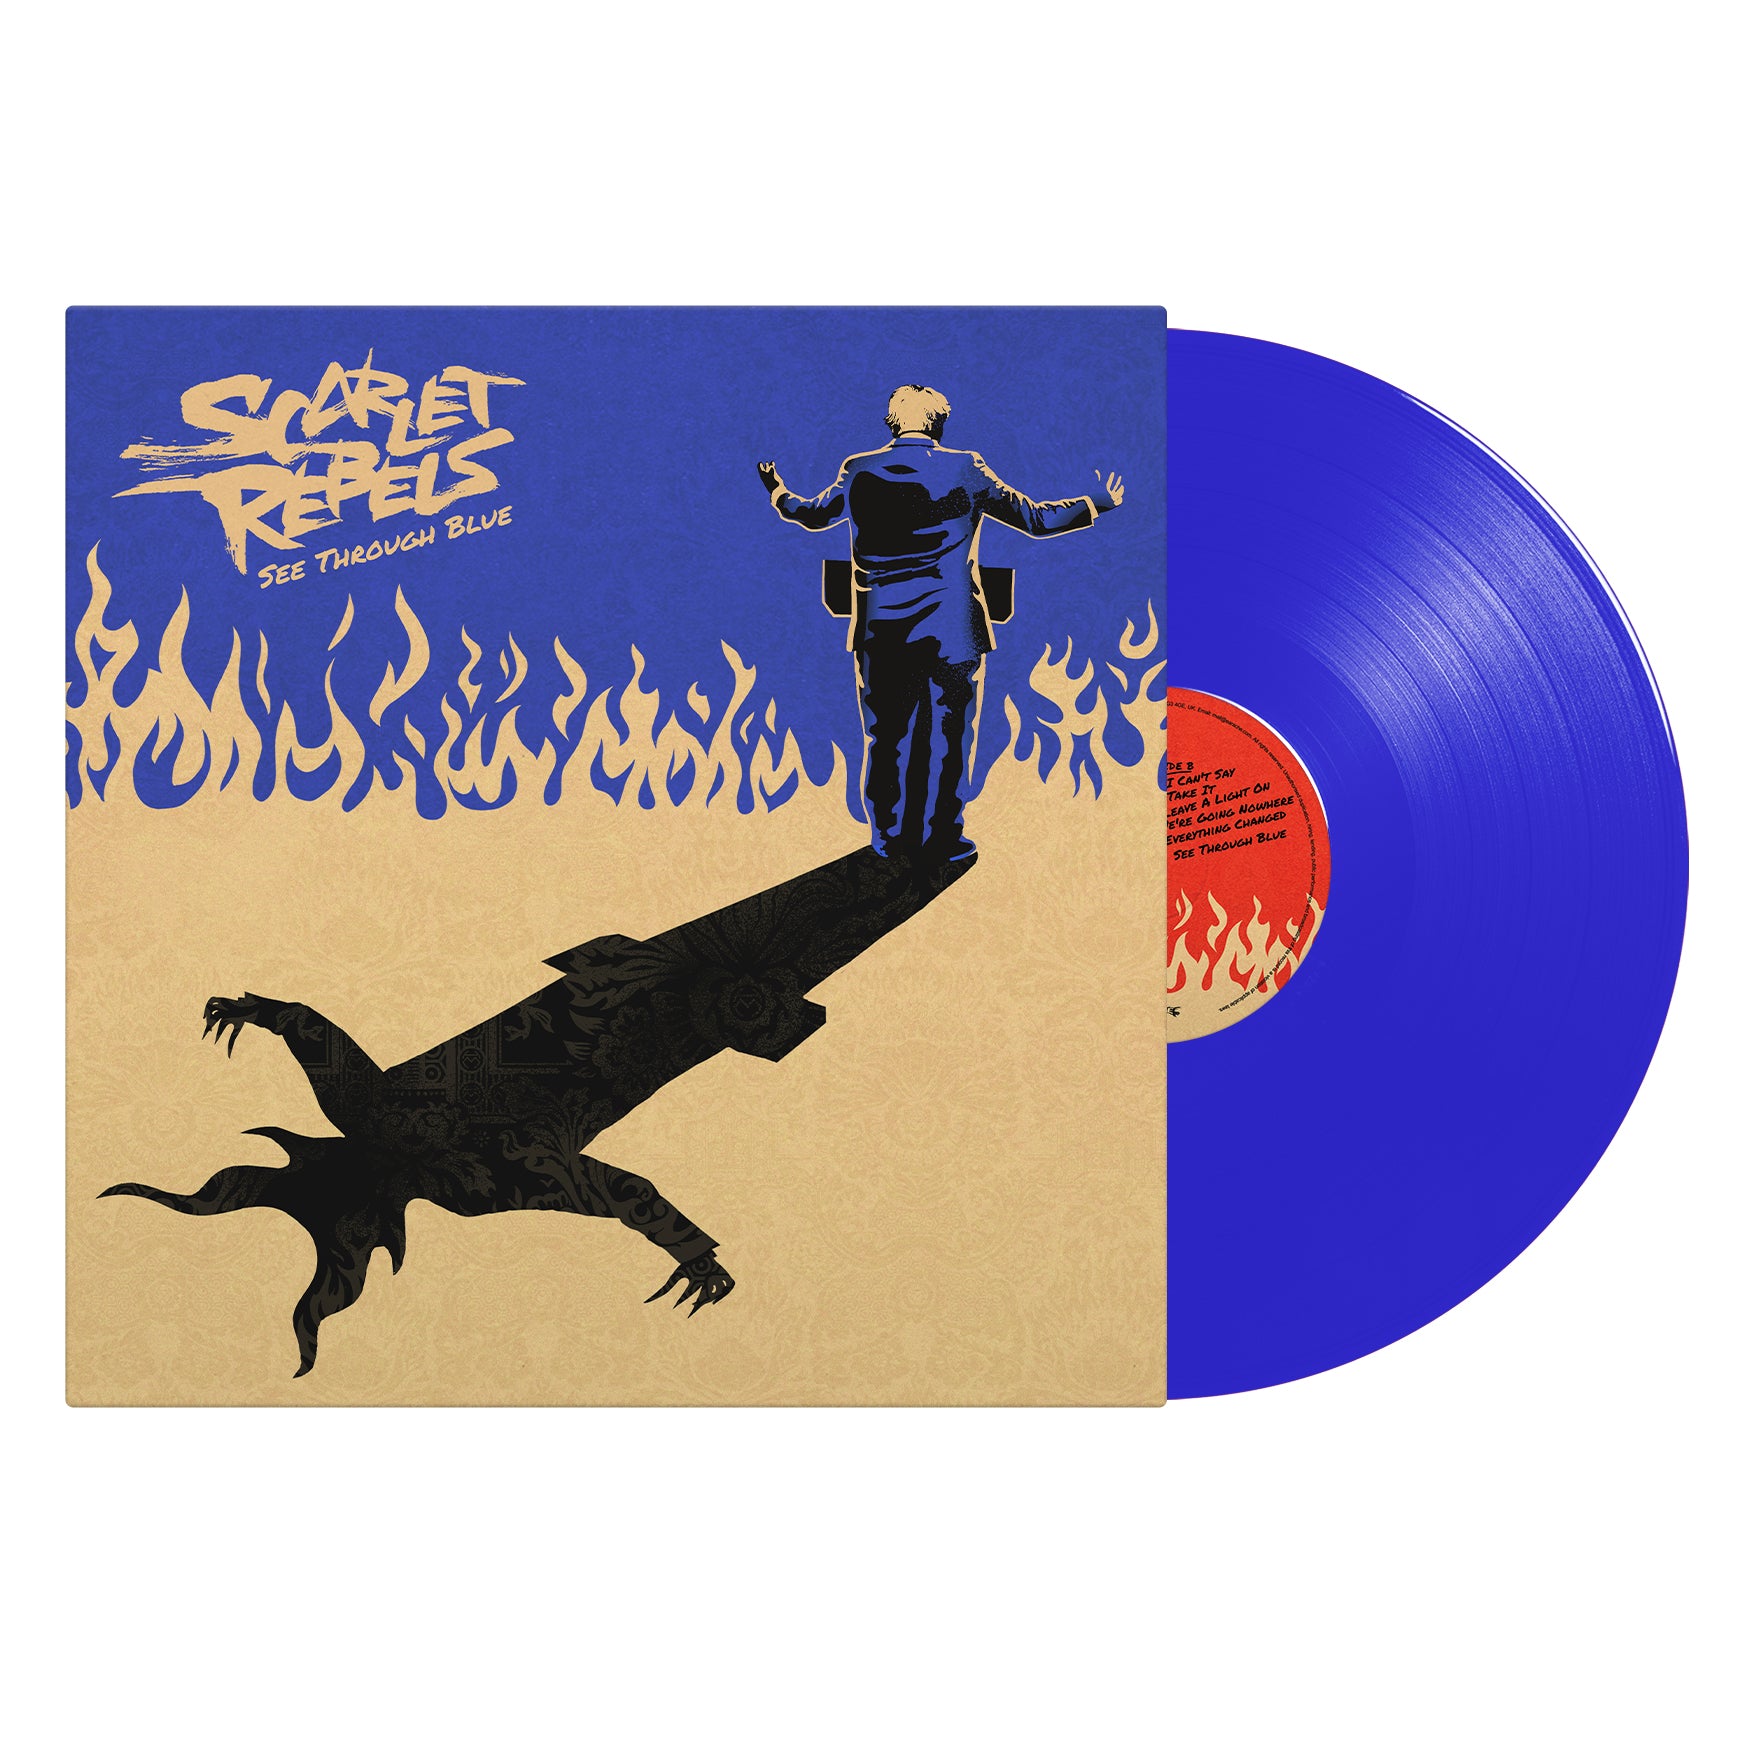 Scarlet Rebels "See Through Blue" Blue Vinyl w/ Alternative Blue Cover